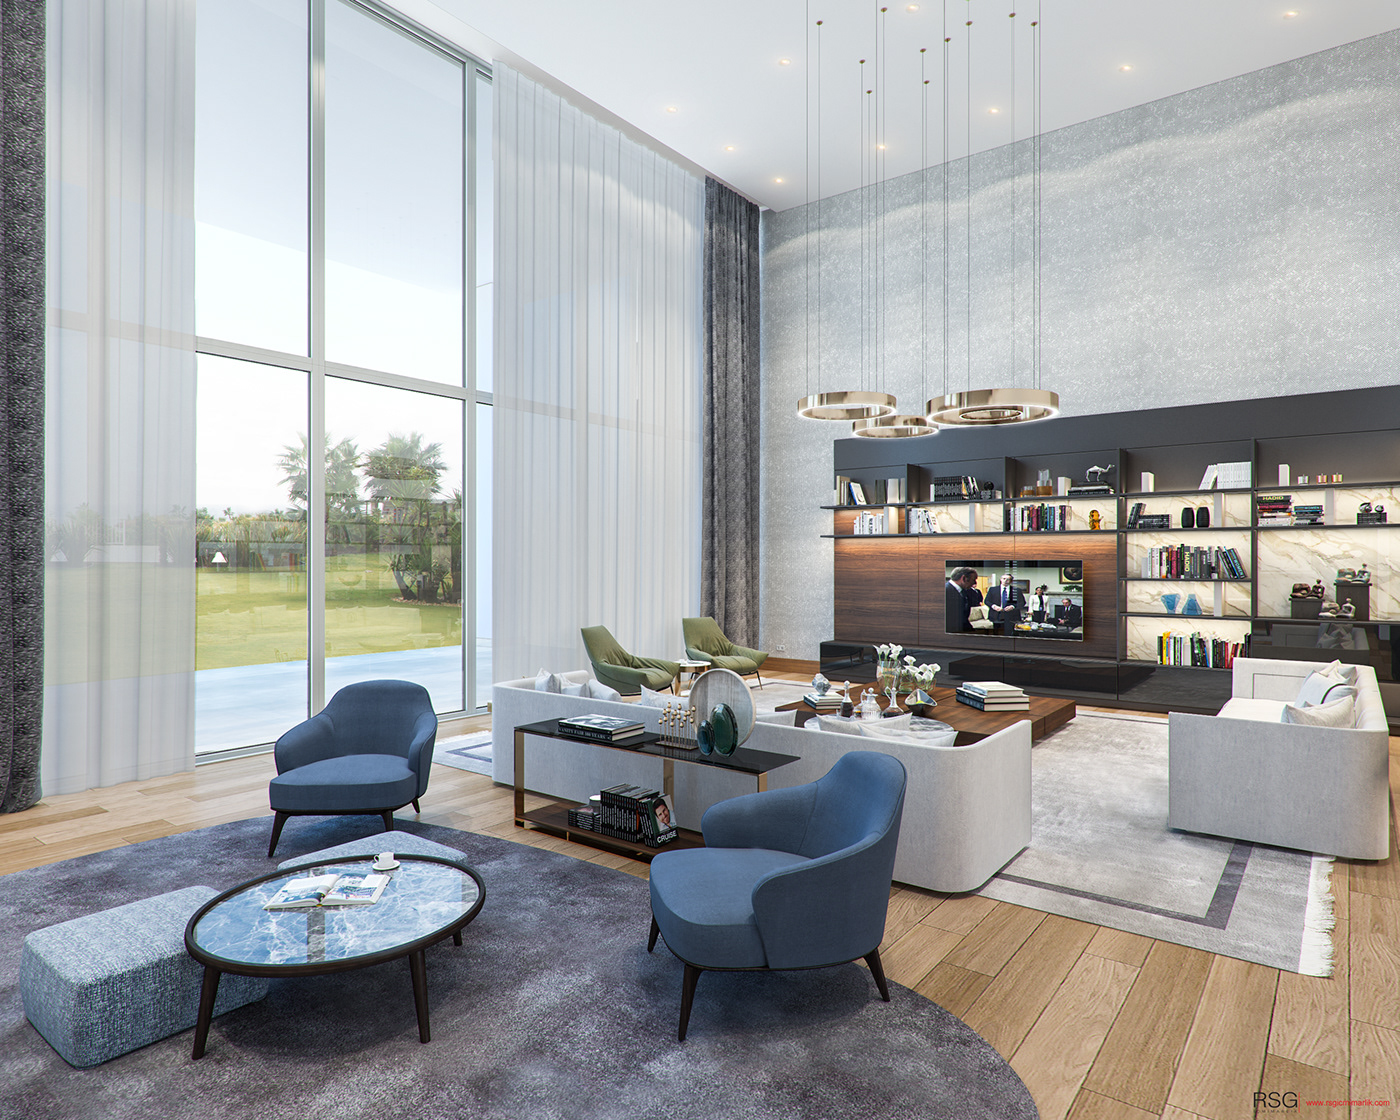 #villa  #living room #Design #3dsmax #vray #interior #photoshop #visualization  #3D